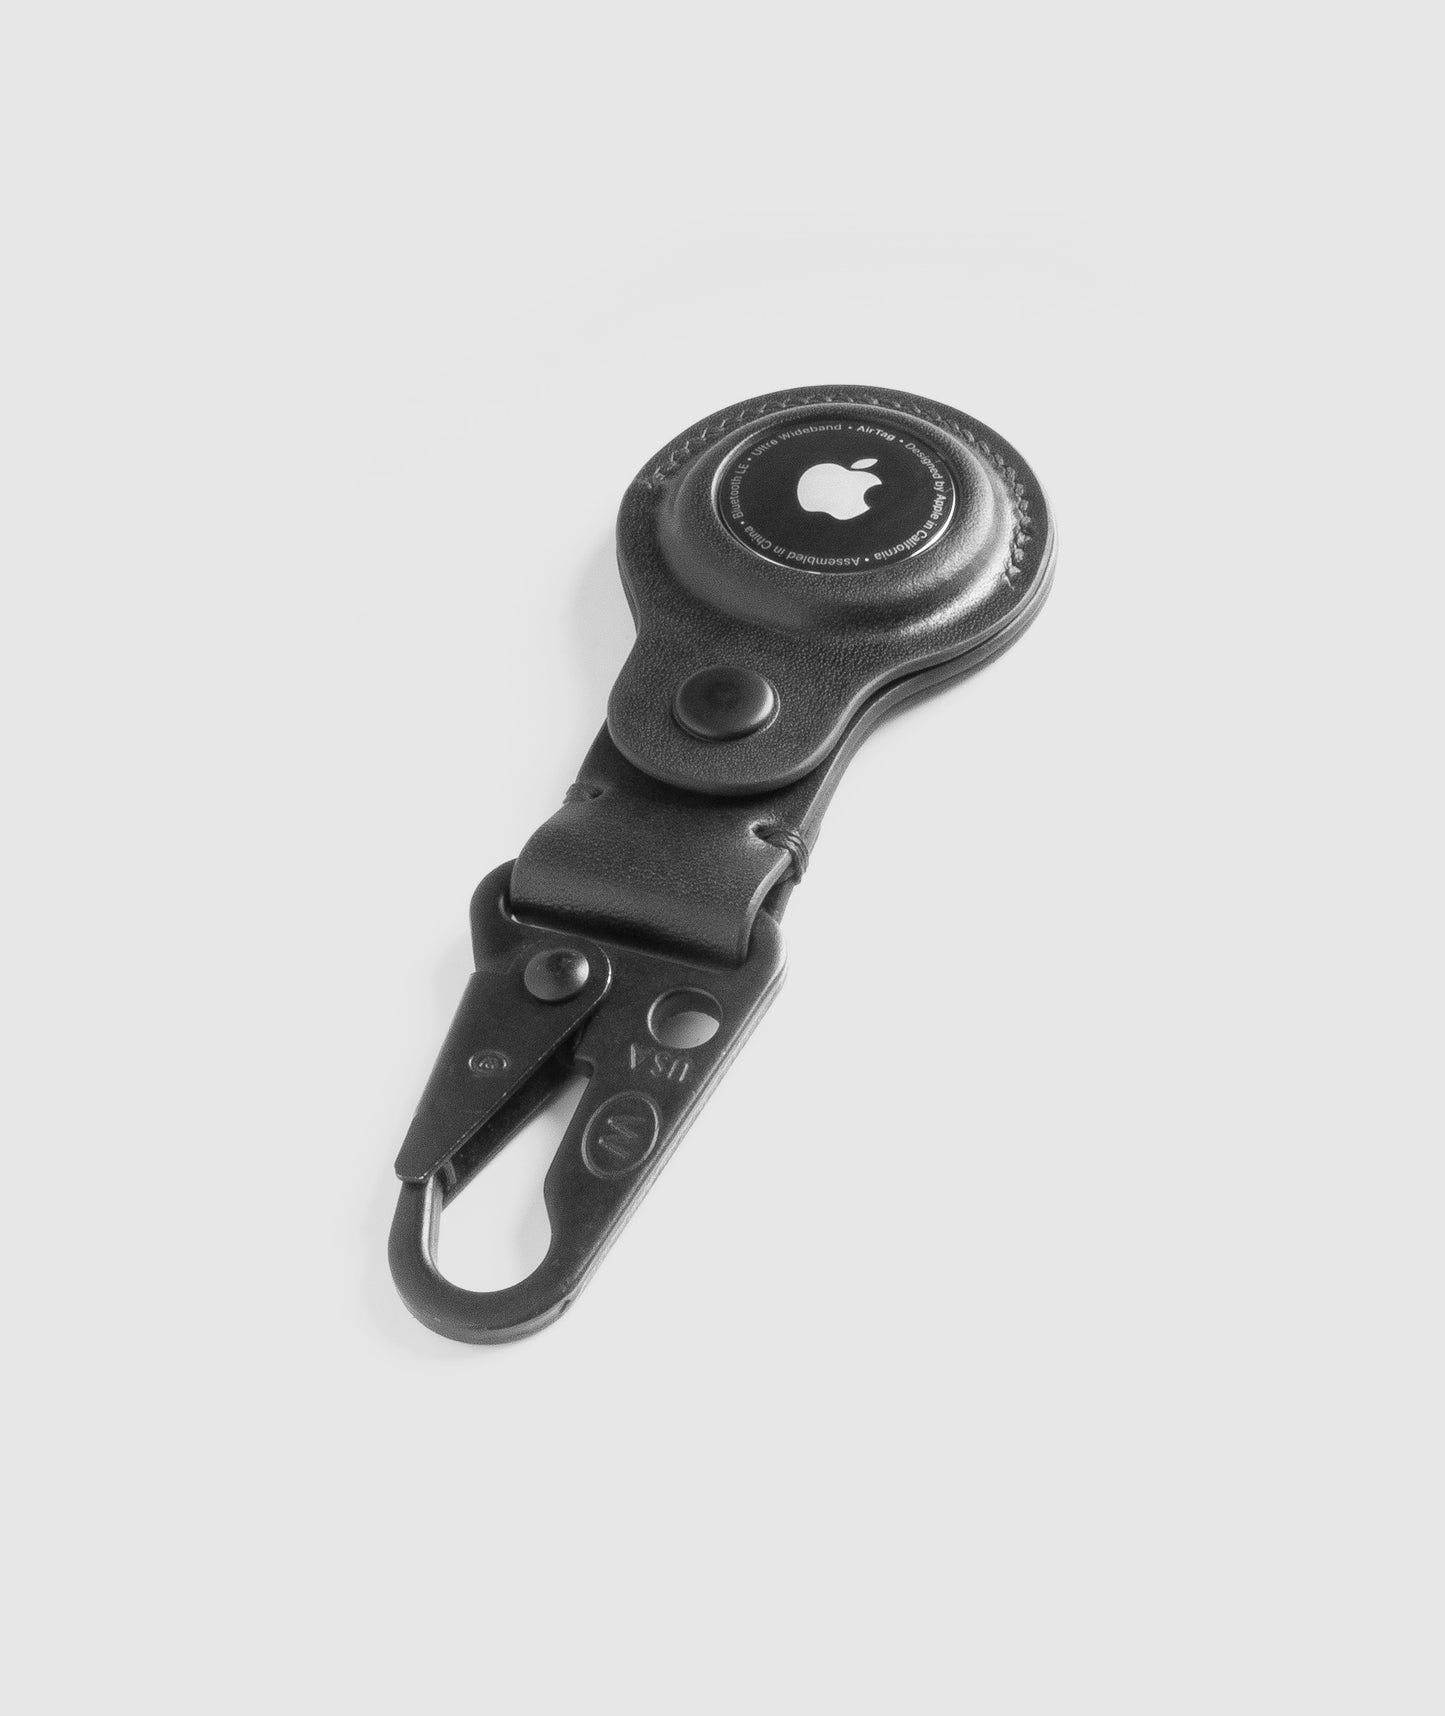 handmade Black leather apple airtag case keychain by darksails - porte clefs airtag en cuir noir fait main